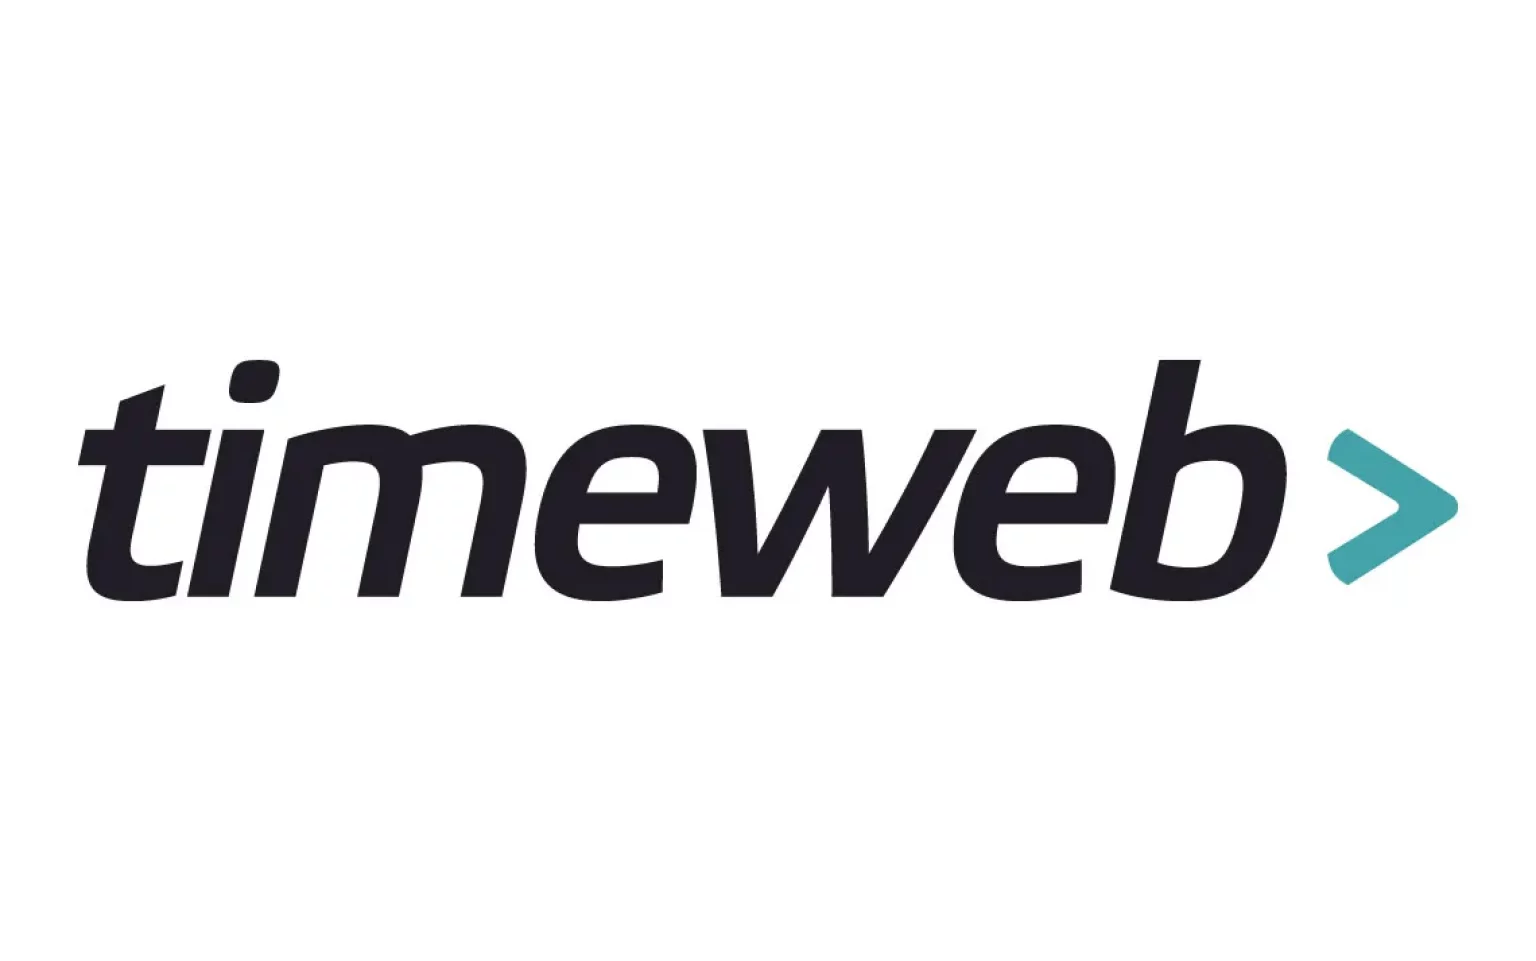 Host timeweb. Timeweb. Хостинг таймвеб. Timeweb лого. Timeweb.ru.